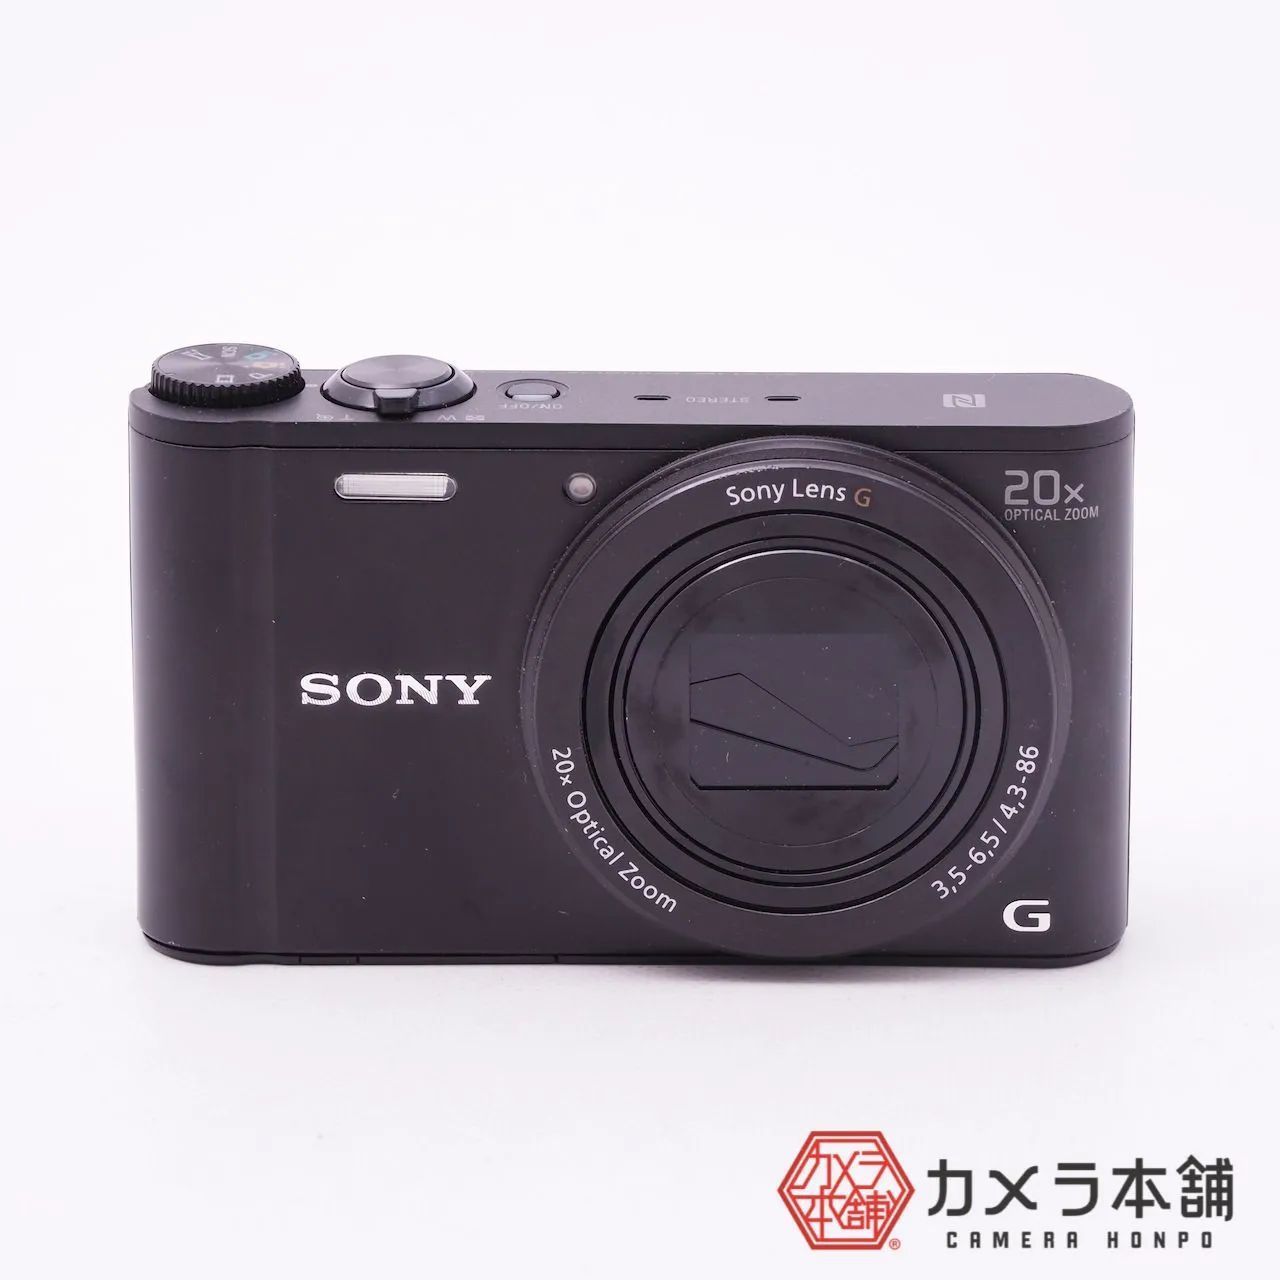 SONYデジタルカメラ Cyber-shot DSC-WX350-B 光学20倍 - メルカリ